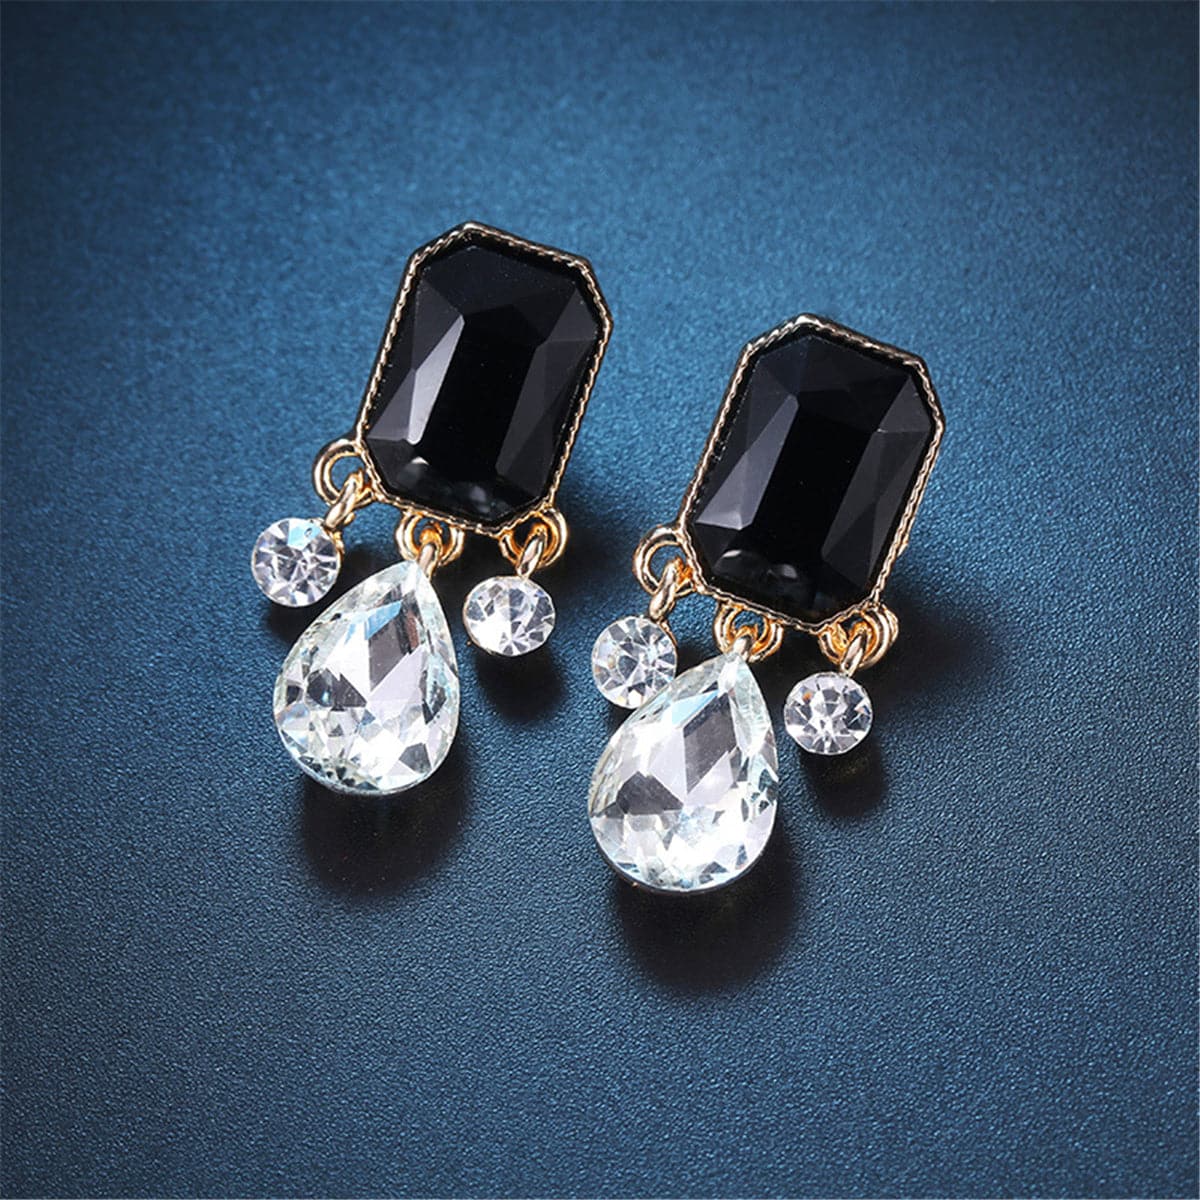 Black Crystal & Cubic Zirconia 18K Gold-Plated Teardrop Earrings